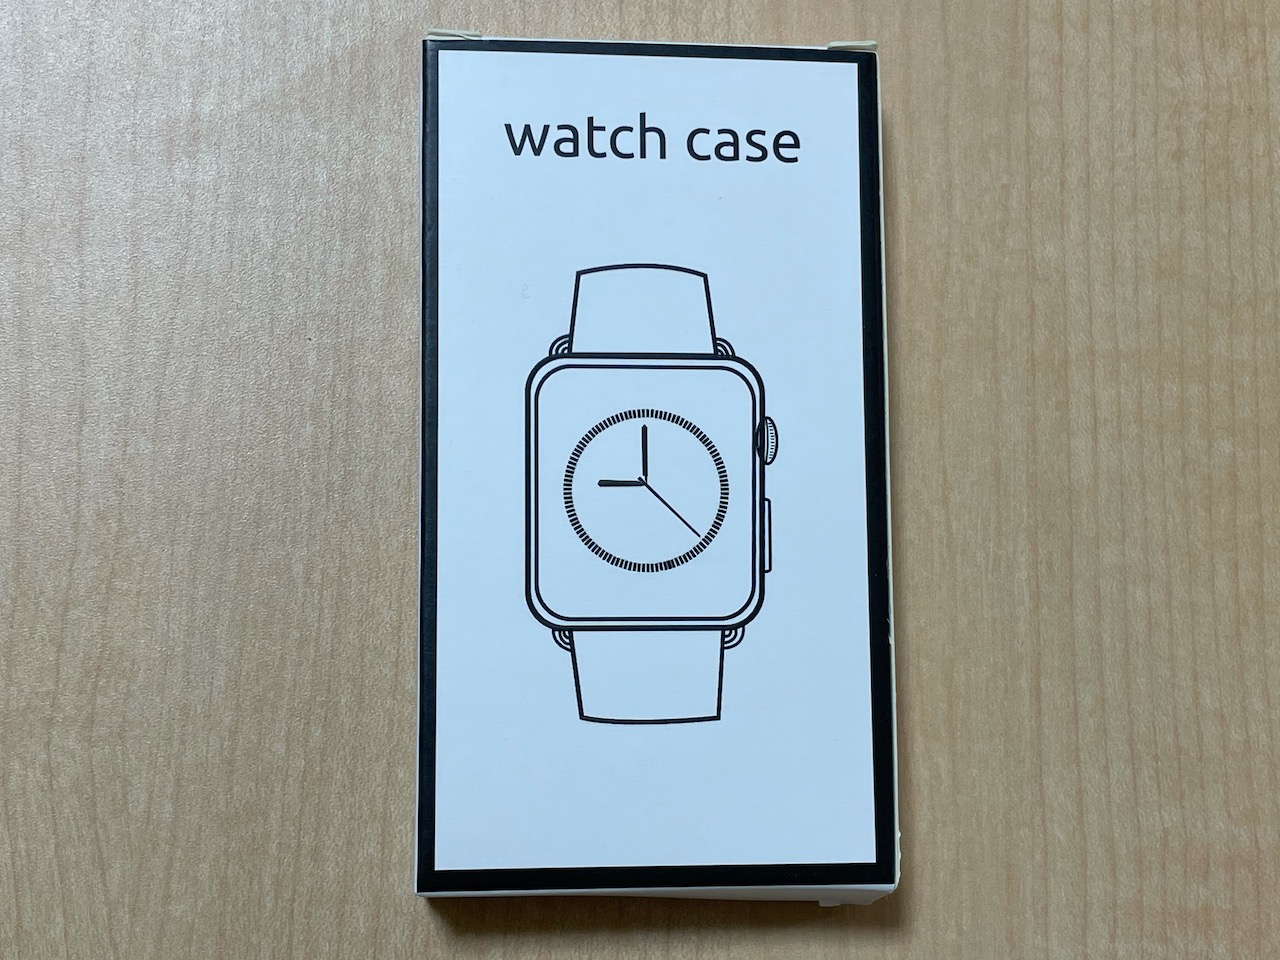 Apple Watch。Yoarmyt 透明クリアケースを購入。開封写真と簡単な